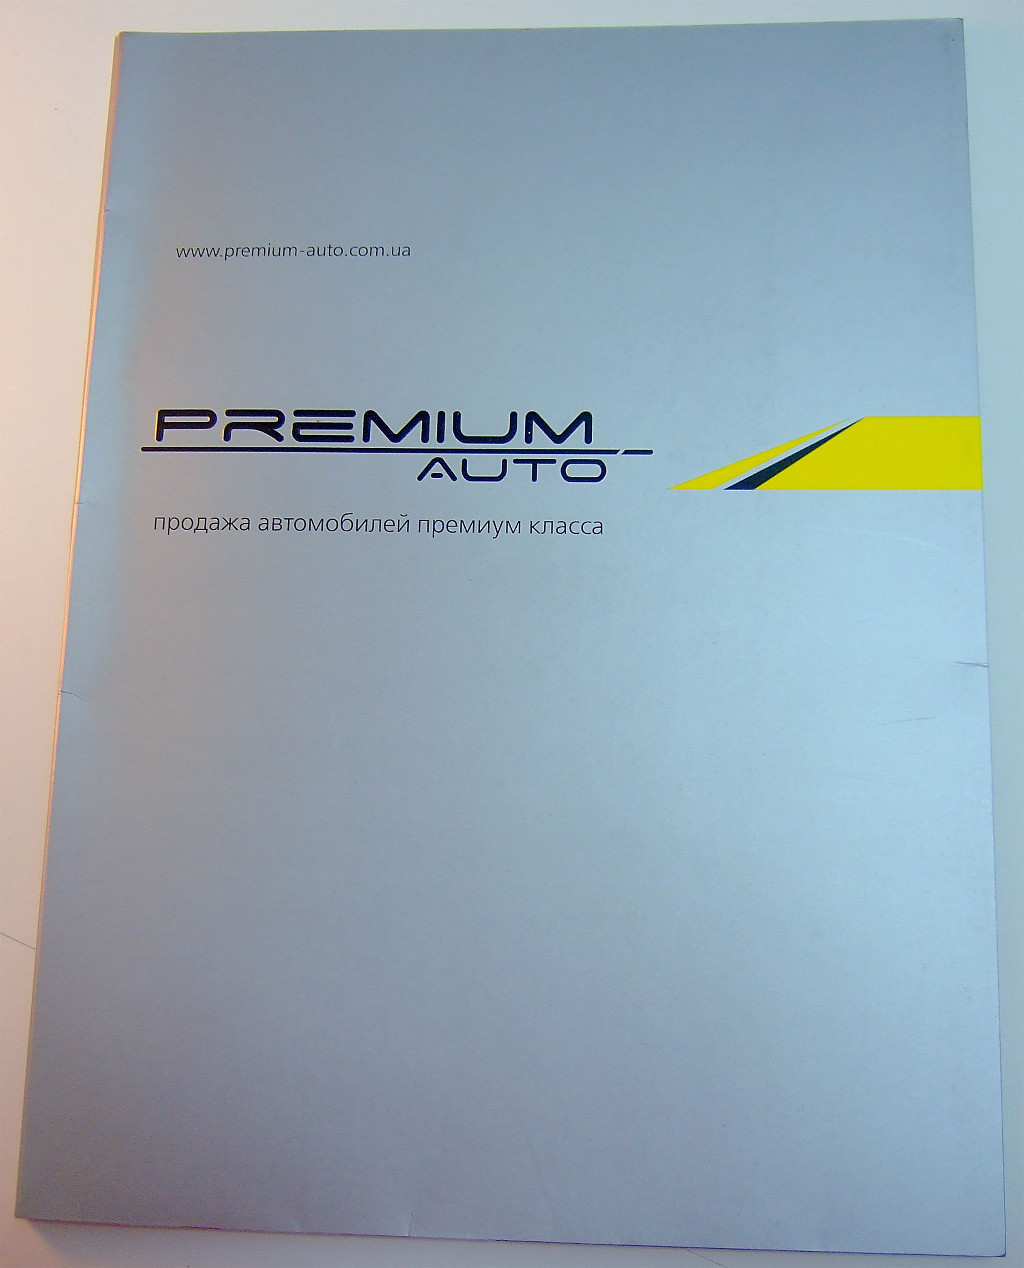 Друк папок «Premium Auto». Поліграфія друкарні Макрос, виготовлення папок, специфікація 956995-1